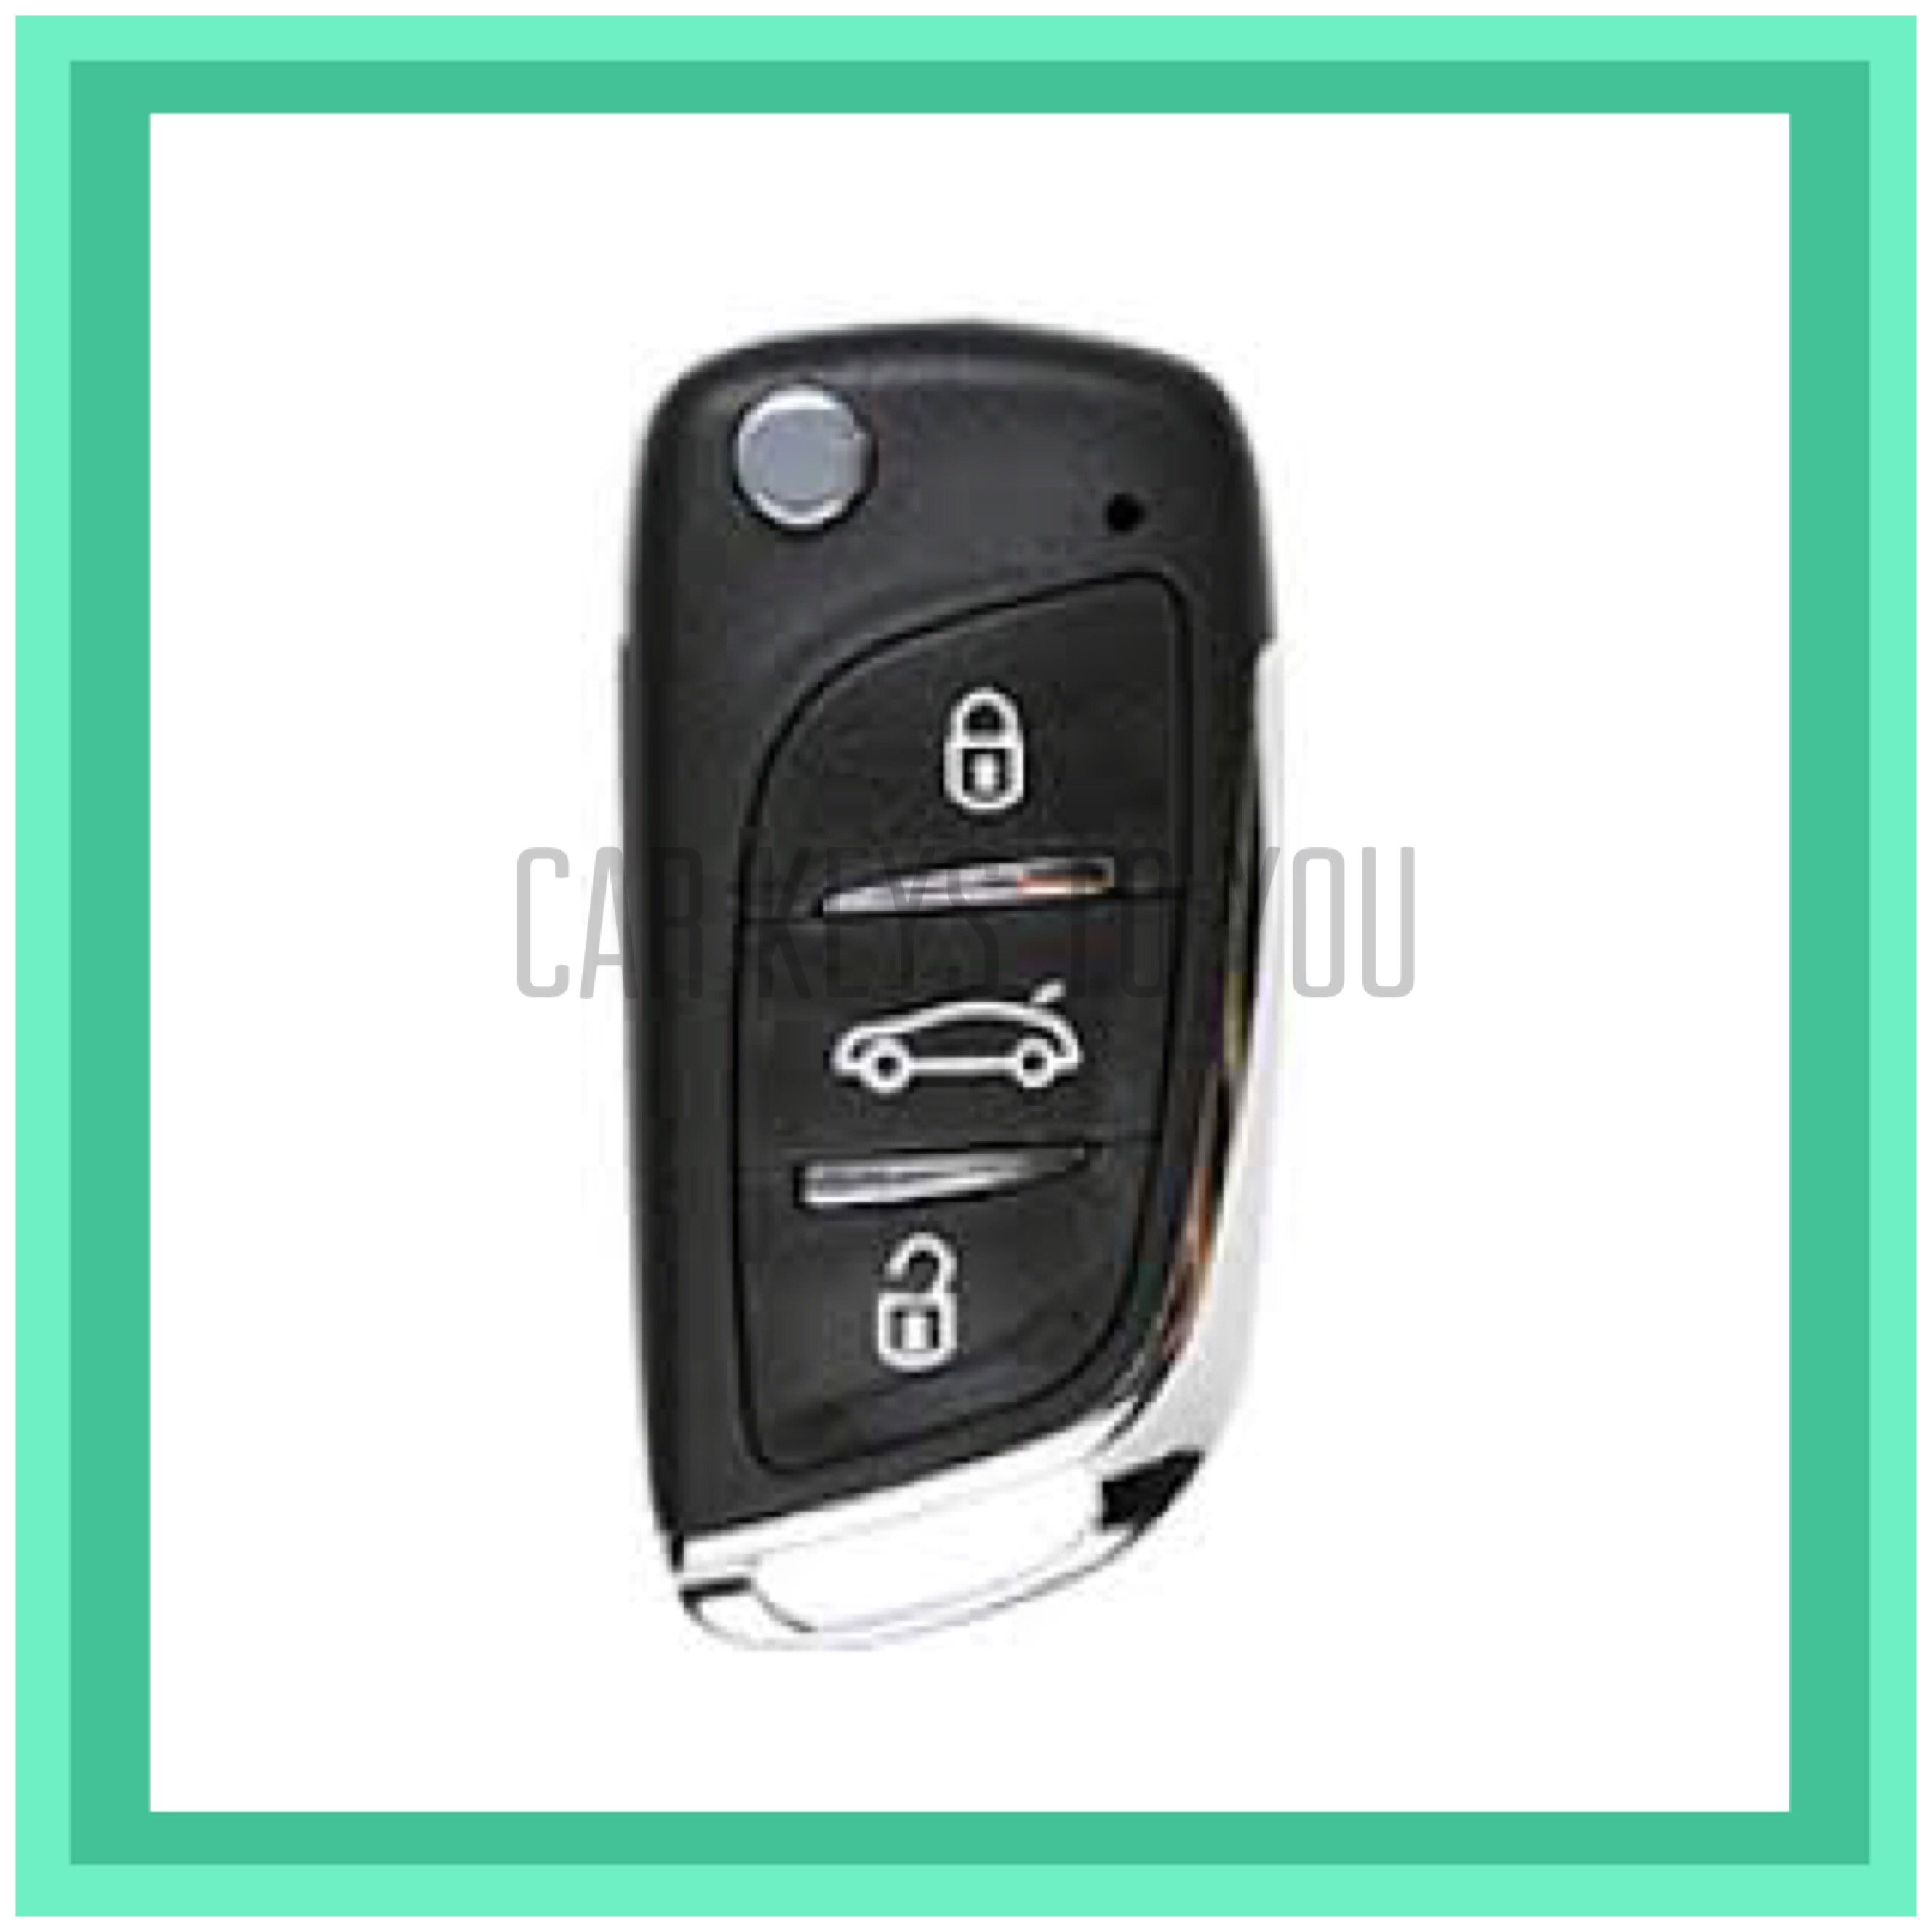 Suzuki Grand Vitara Car Key and Remote. Suit JB 2005 - 2006